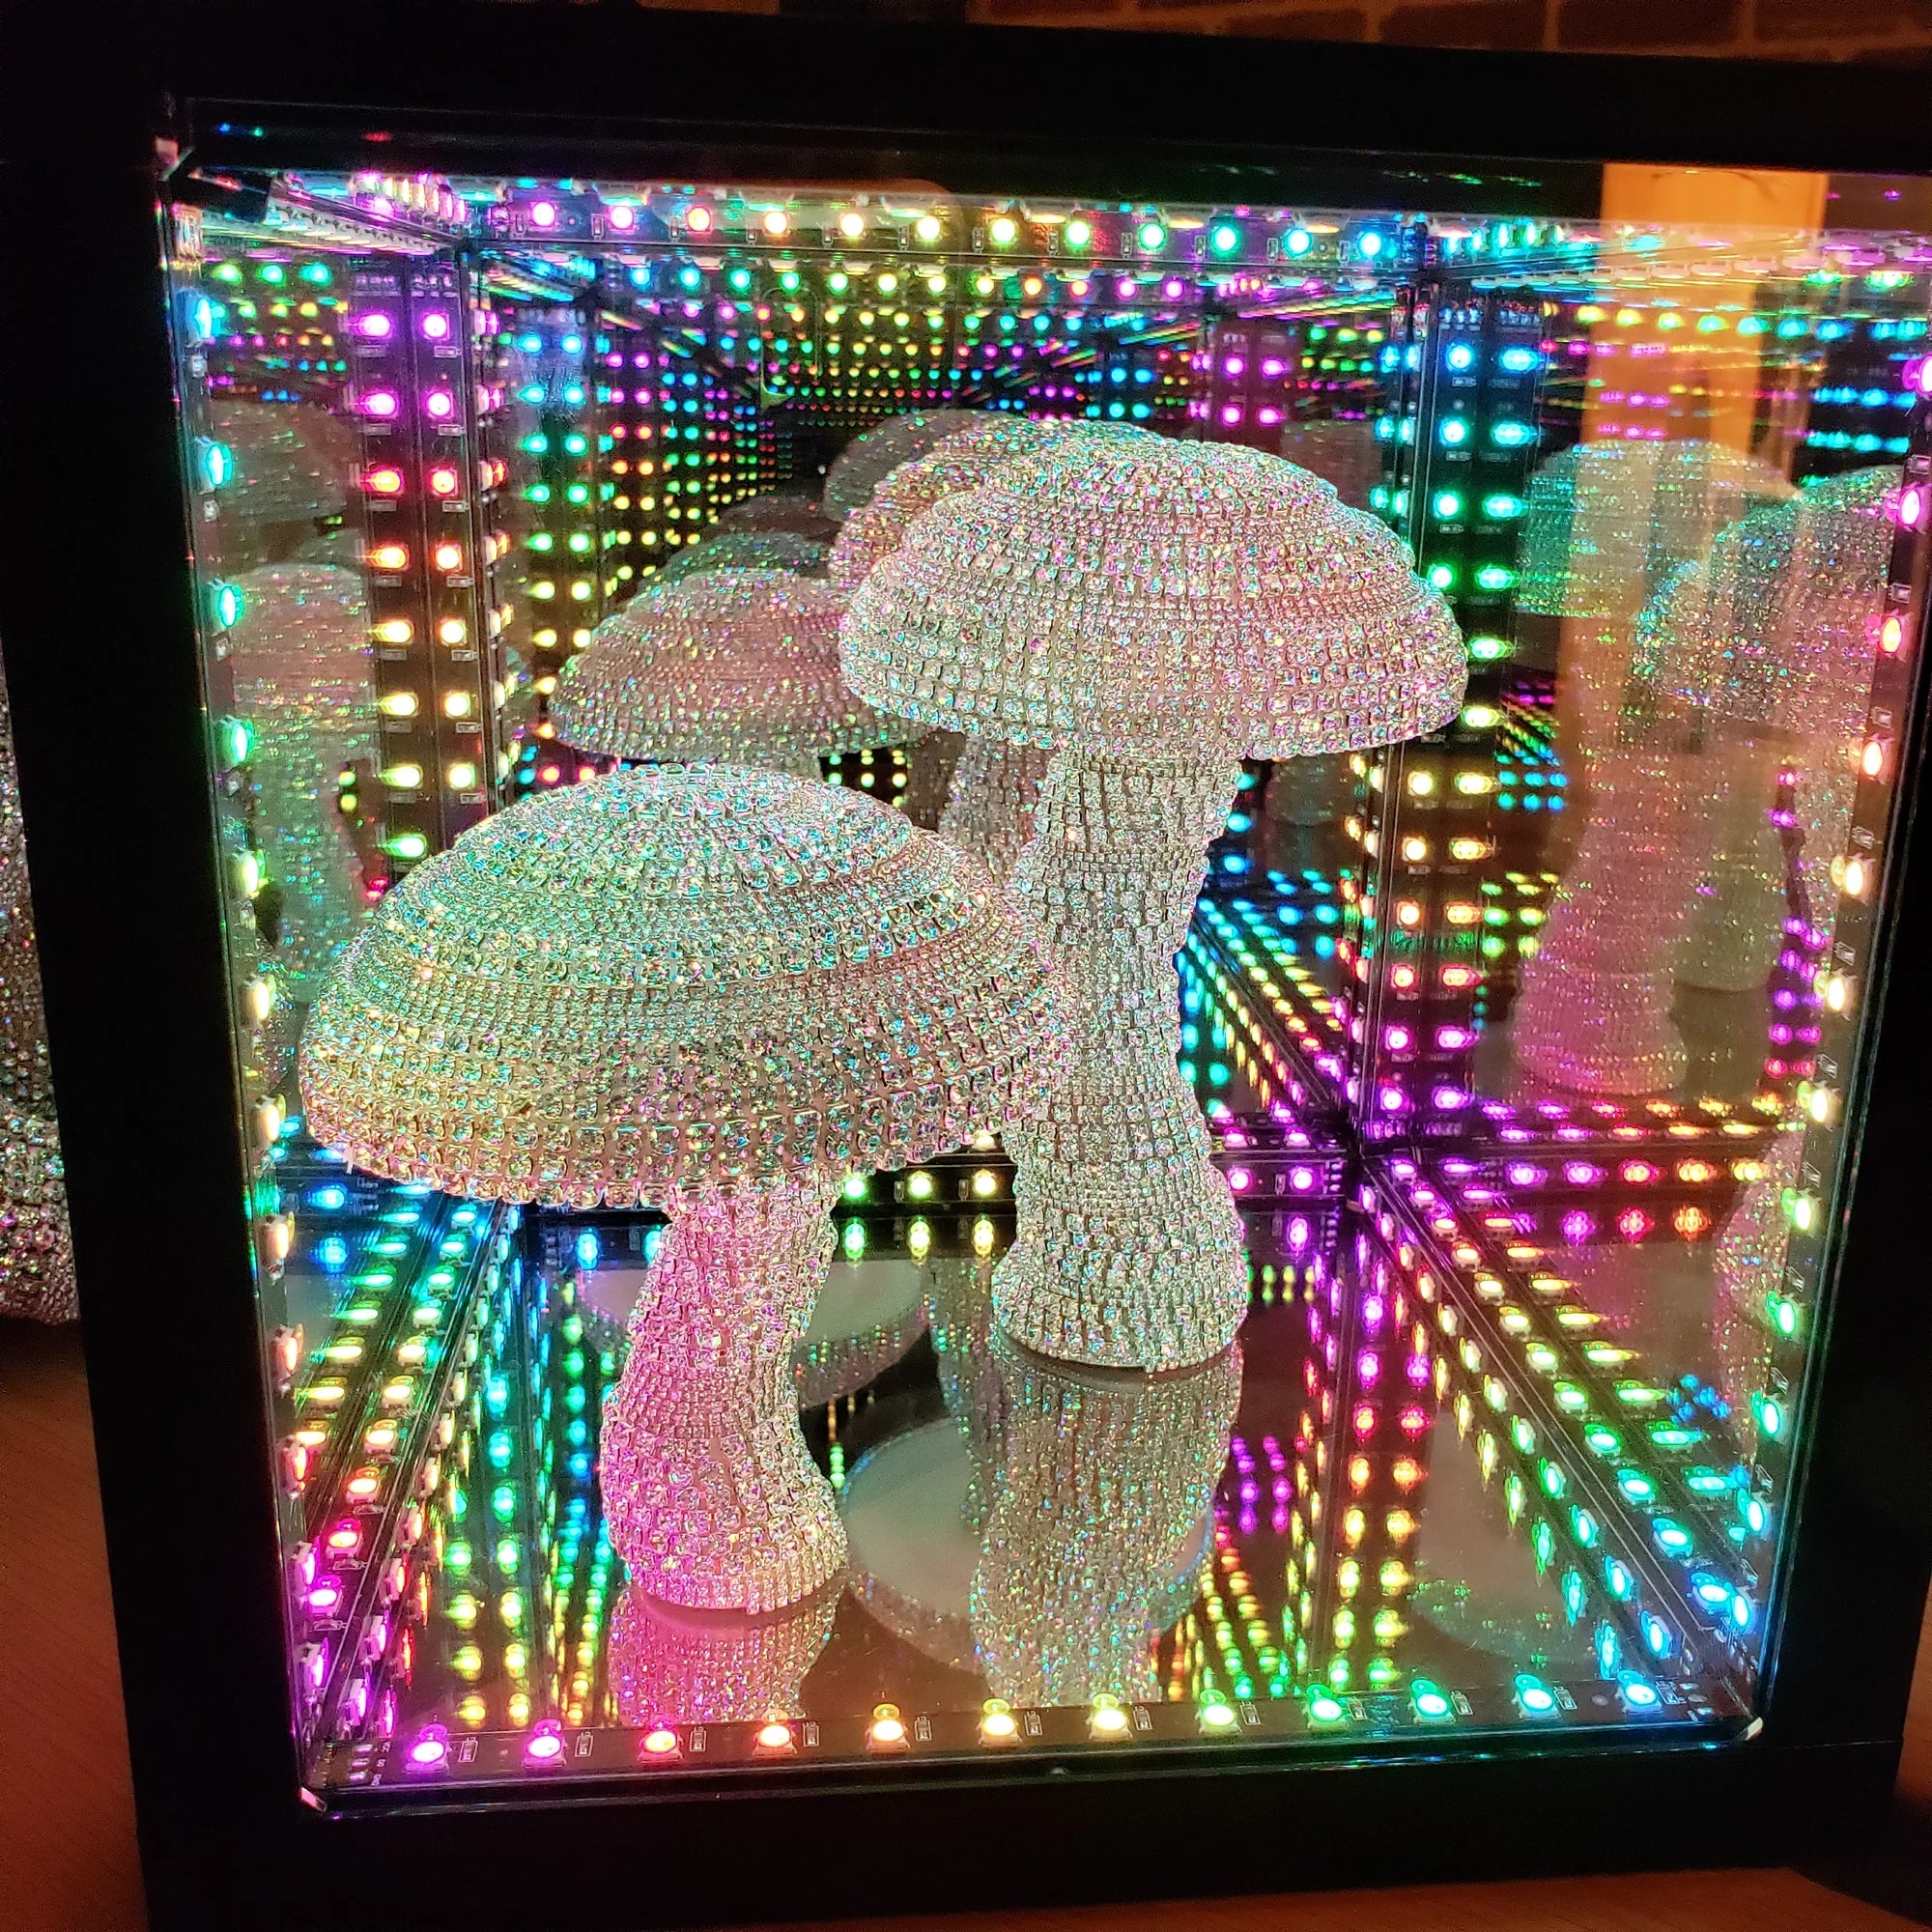 led lights shining on mushrooms